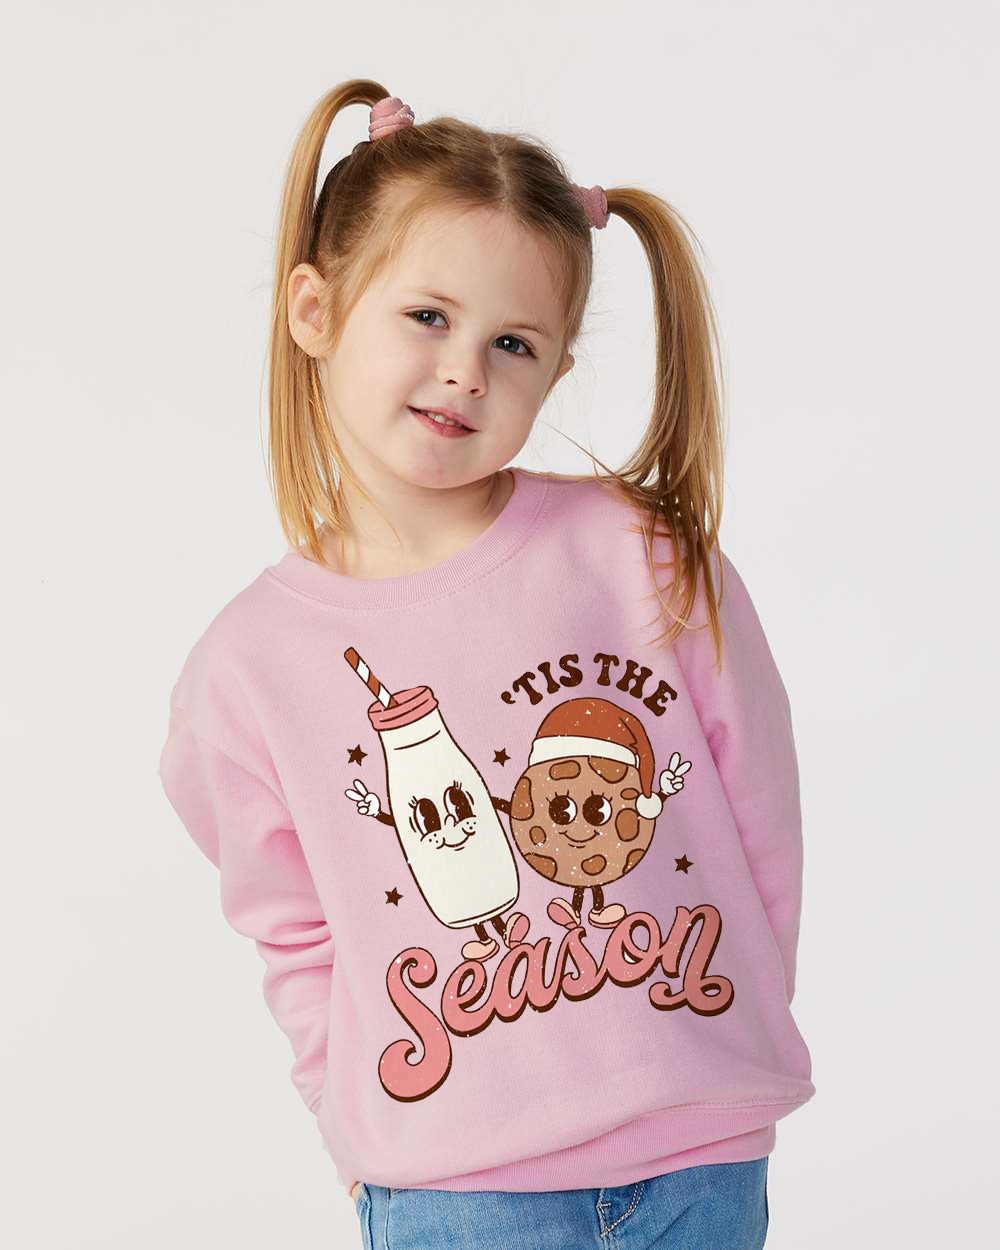 'Tis the Season sweatshirt - Christmas Sweatshirt For Kids